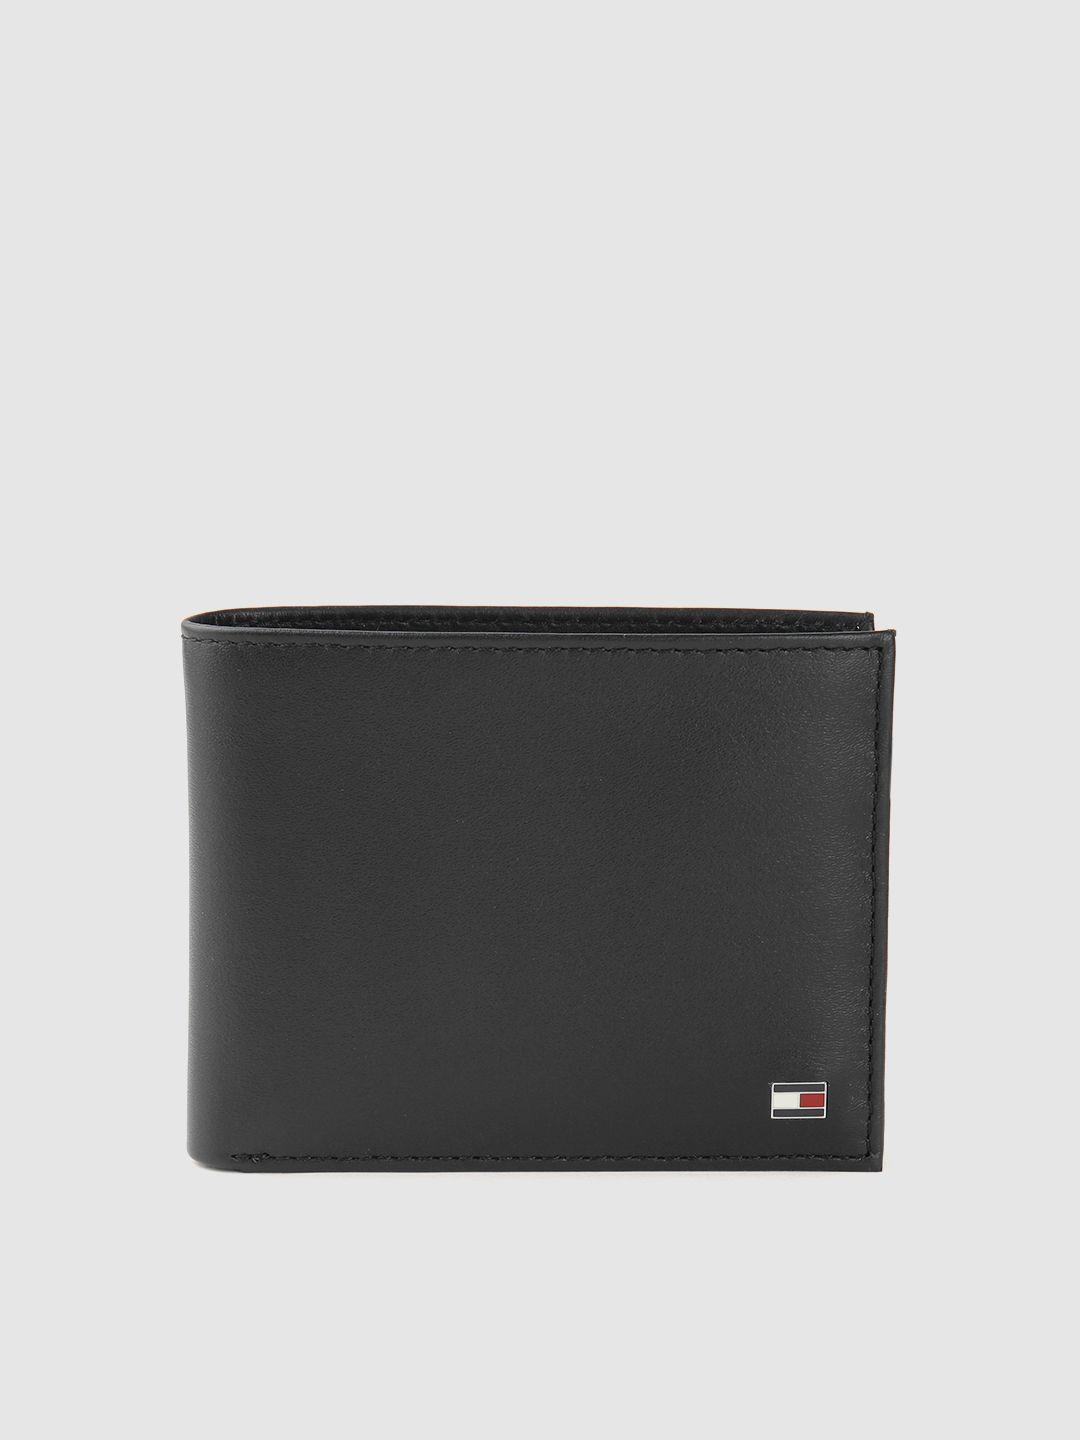 Tommy Hilfiger Men Black Solid Leather Two Fold Wallet